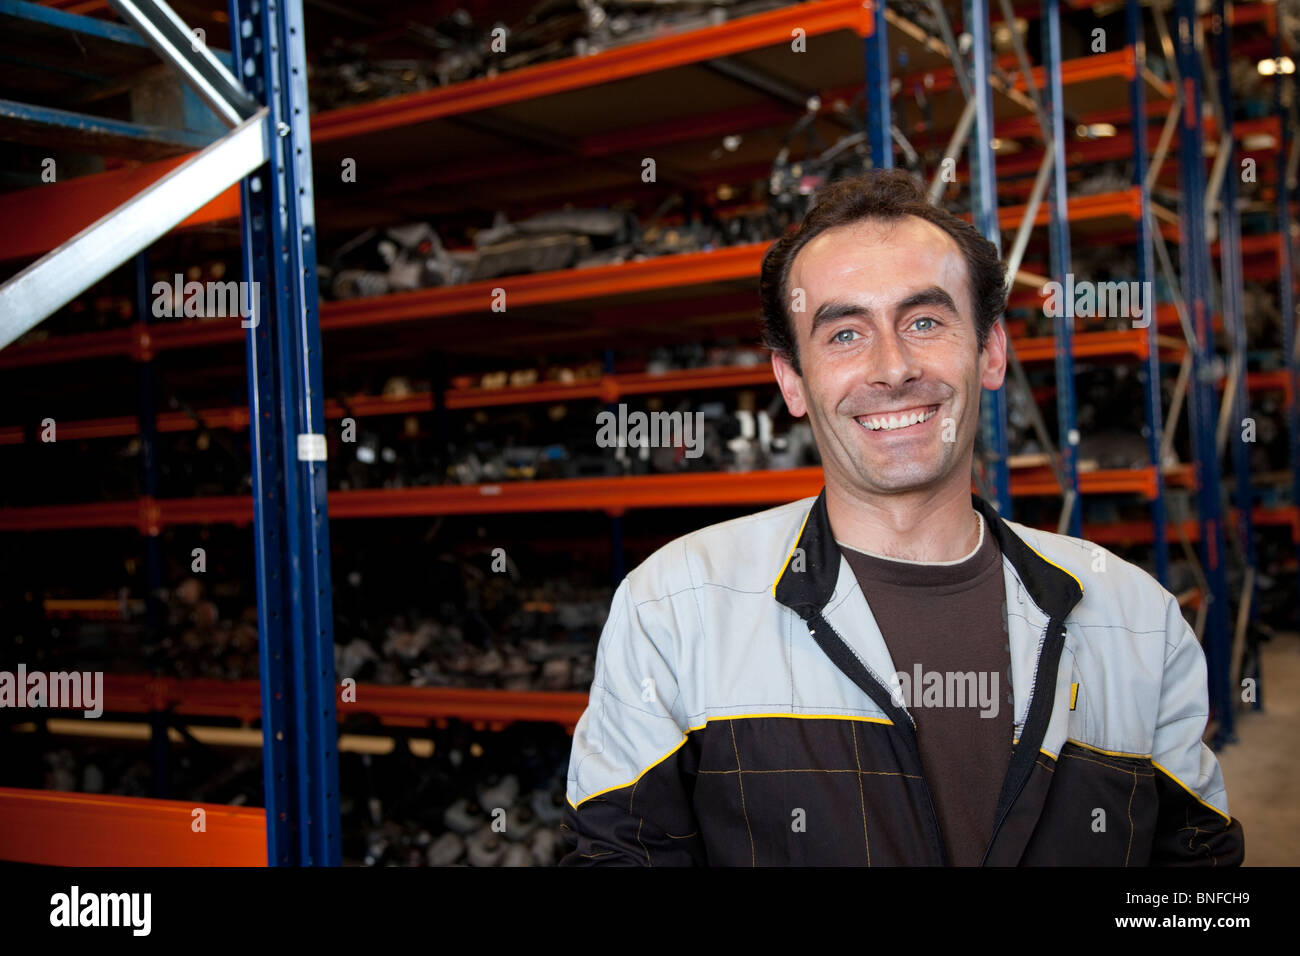 Mechanic smiling on a warehouse Stock Photo